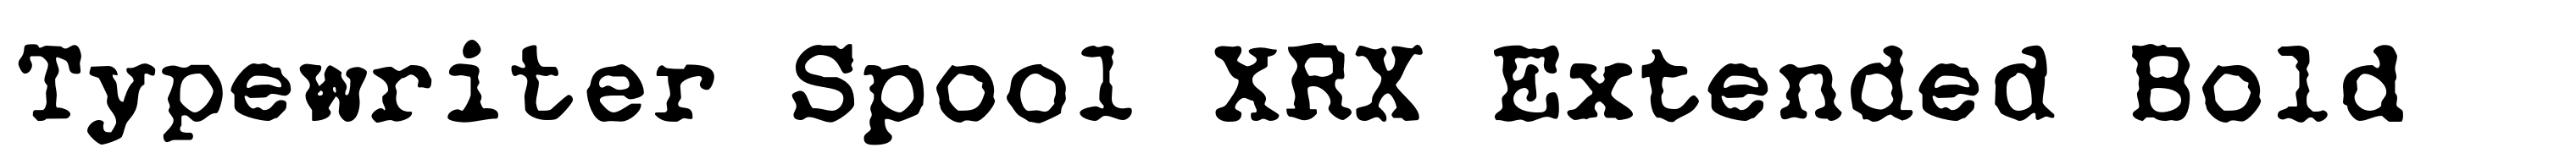 Typewriter Spool XRX Extended Bold